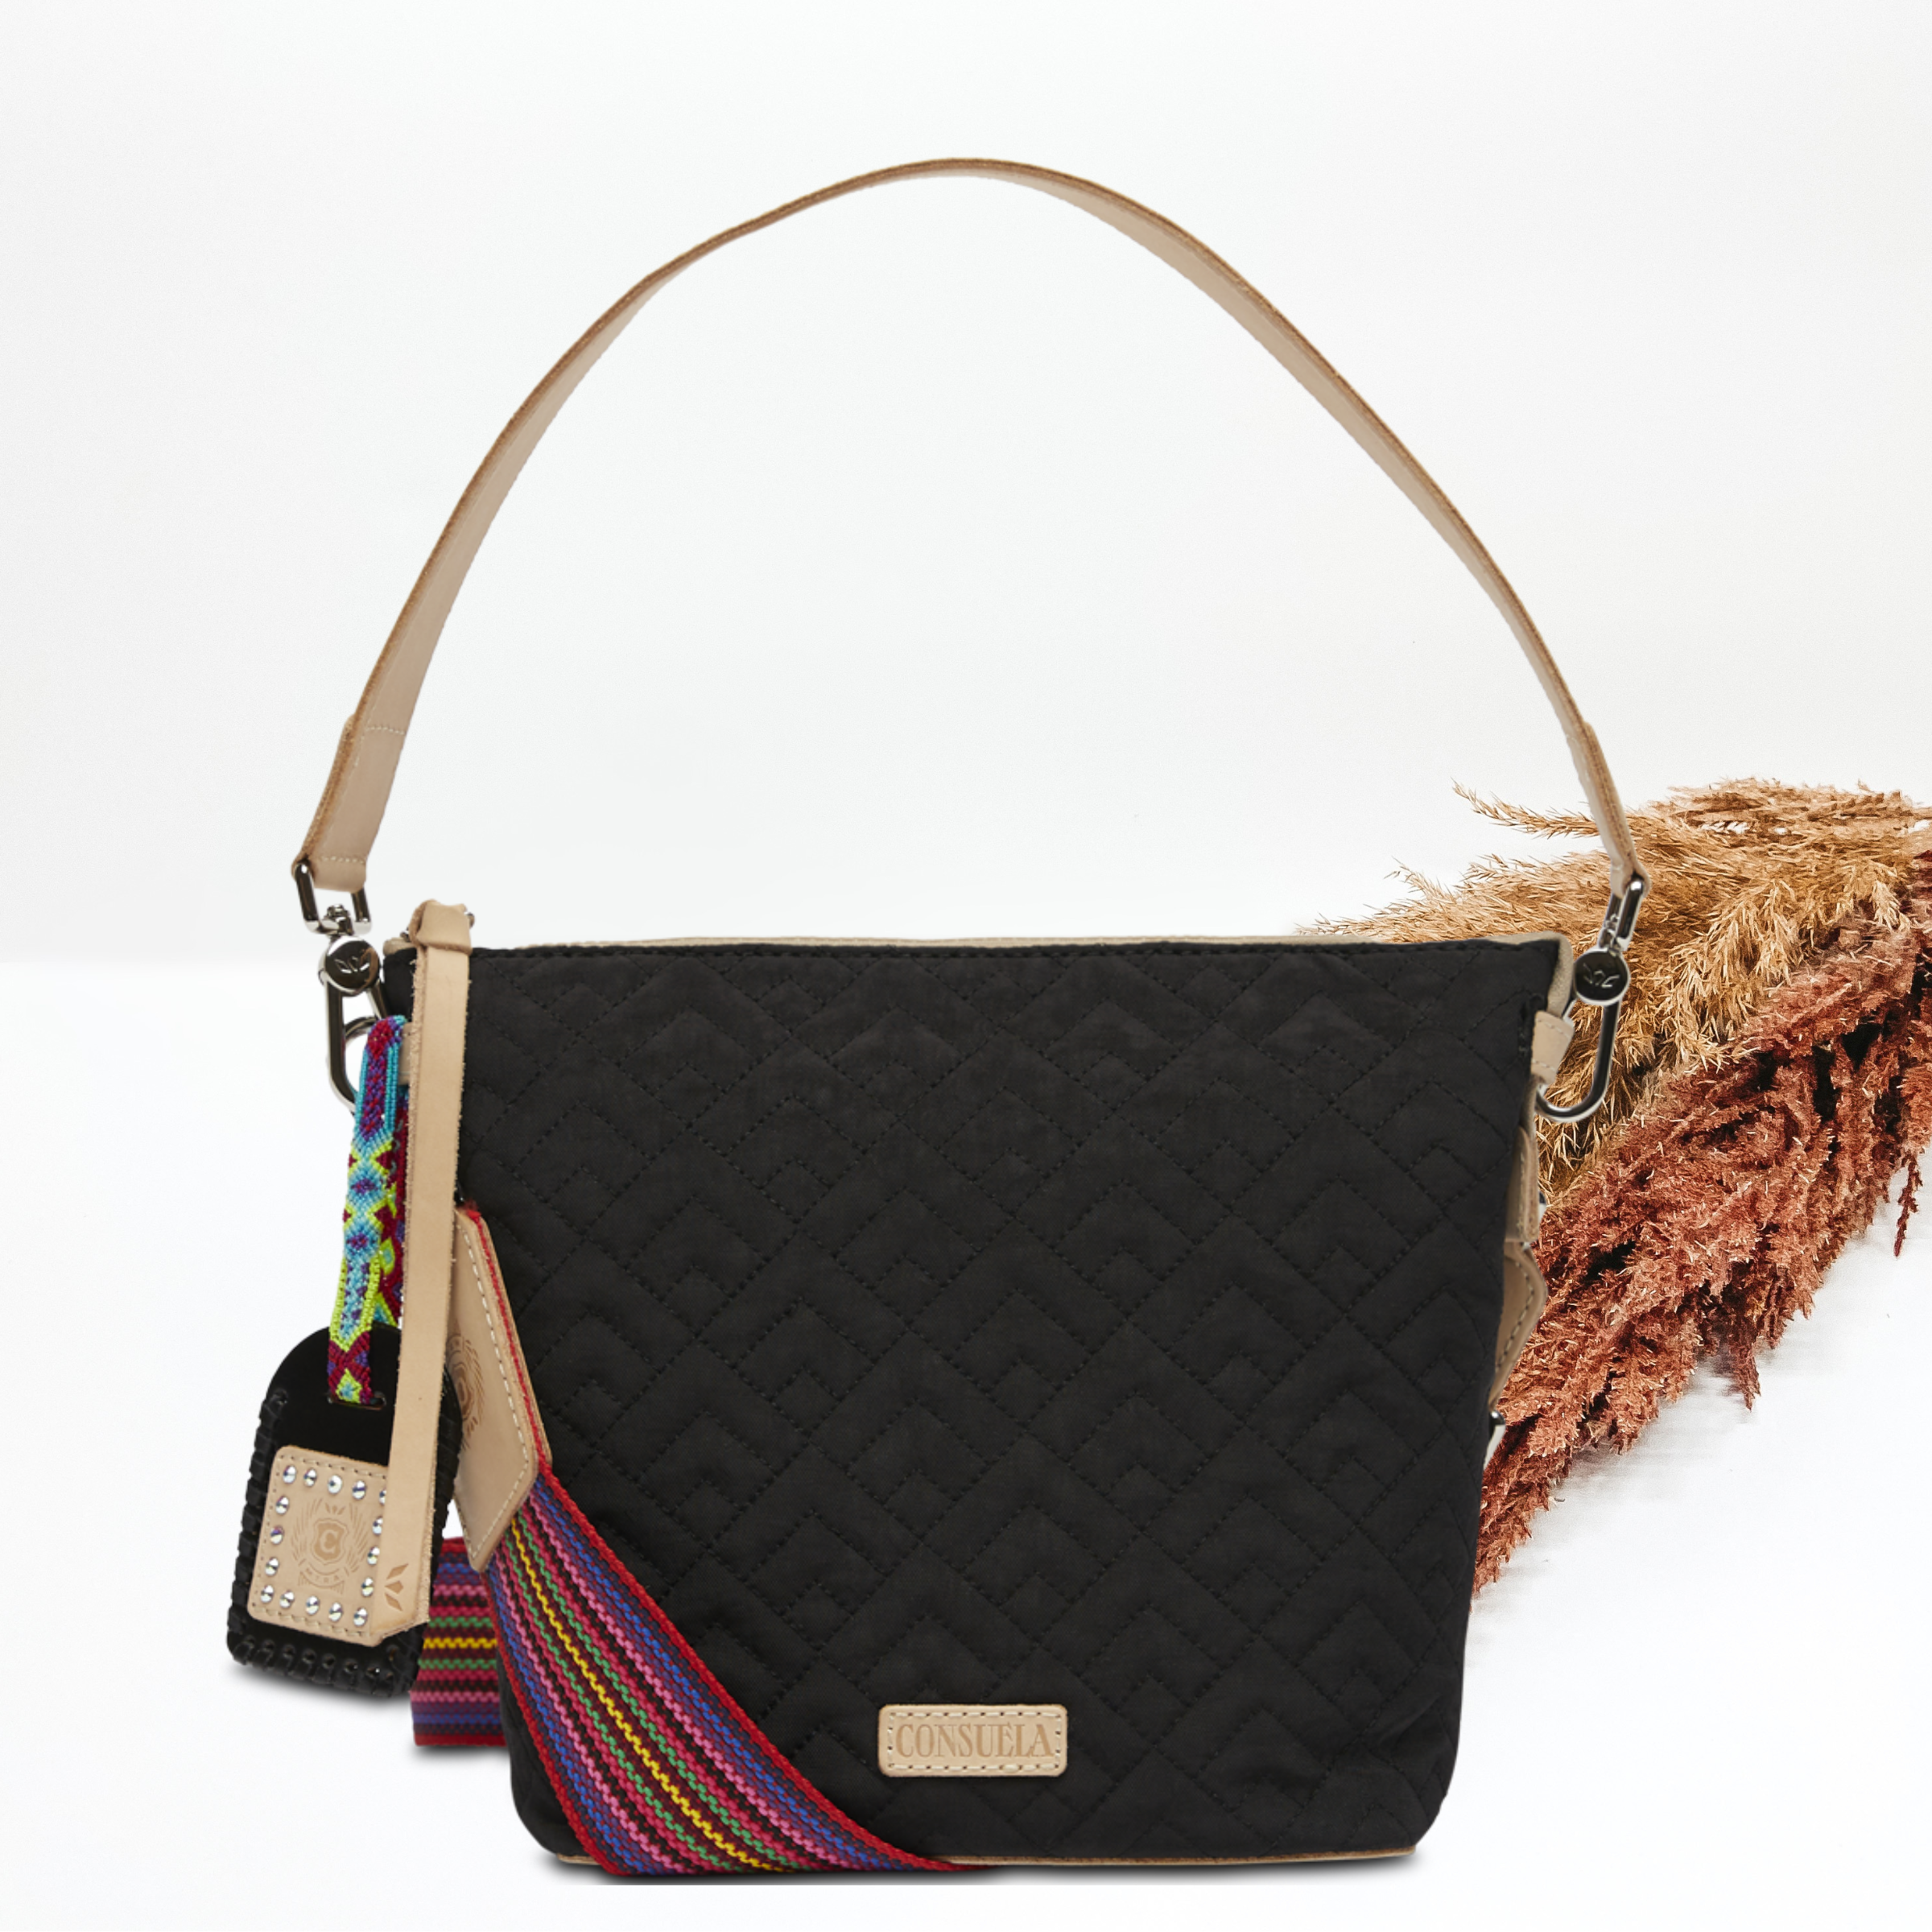 Consuela | Meg Wedge Bag - Giddy Up Glamour Boutique